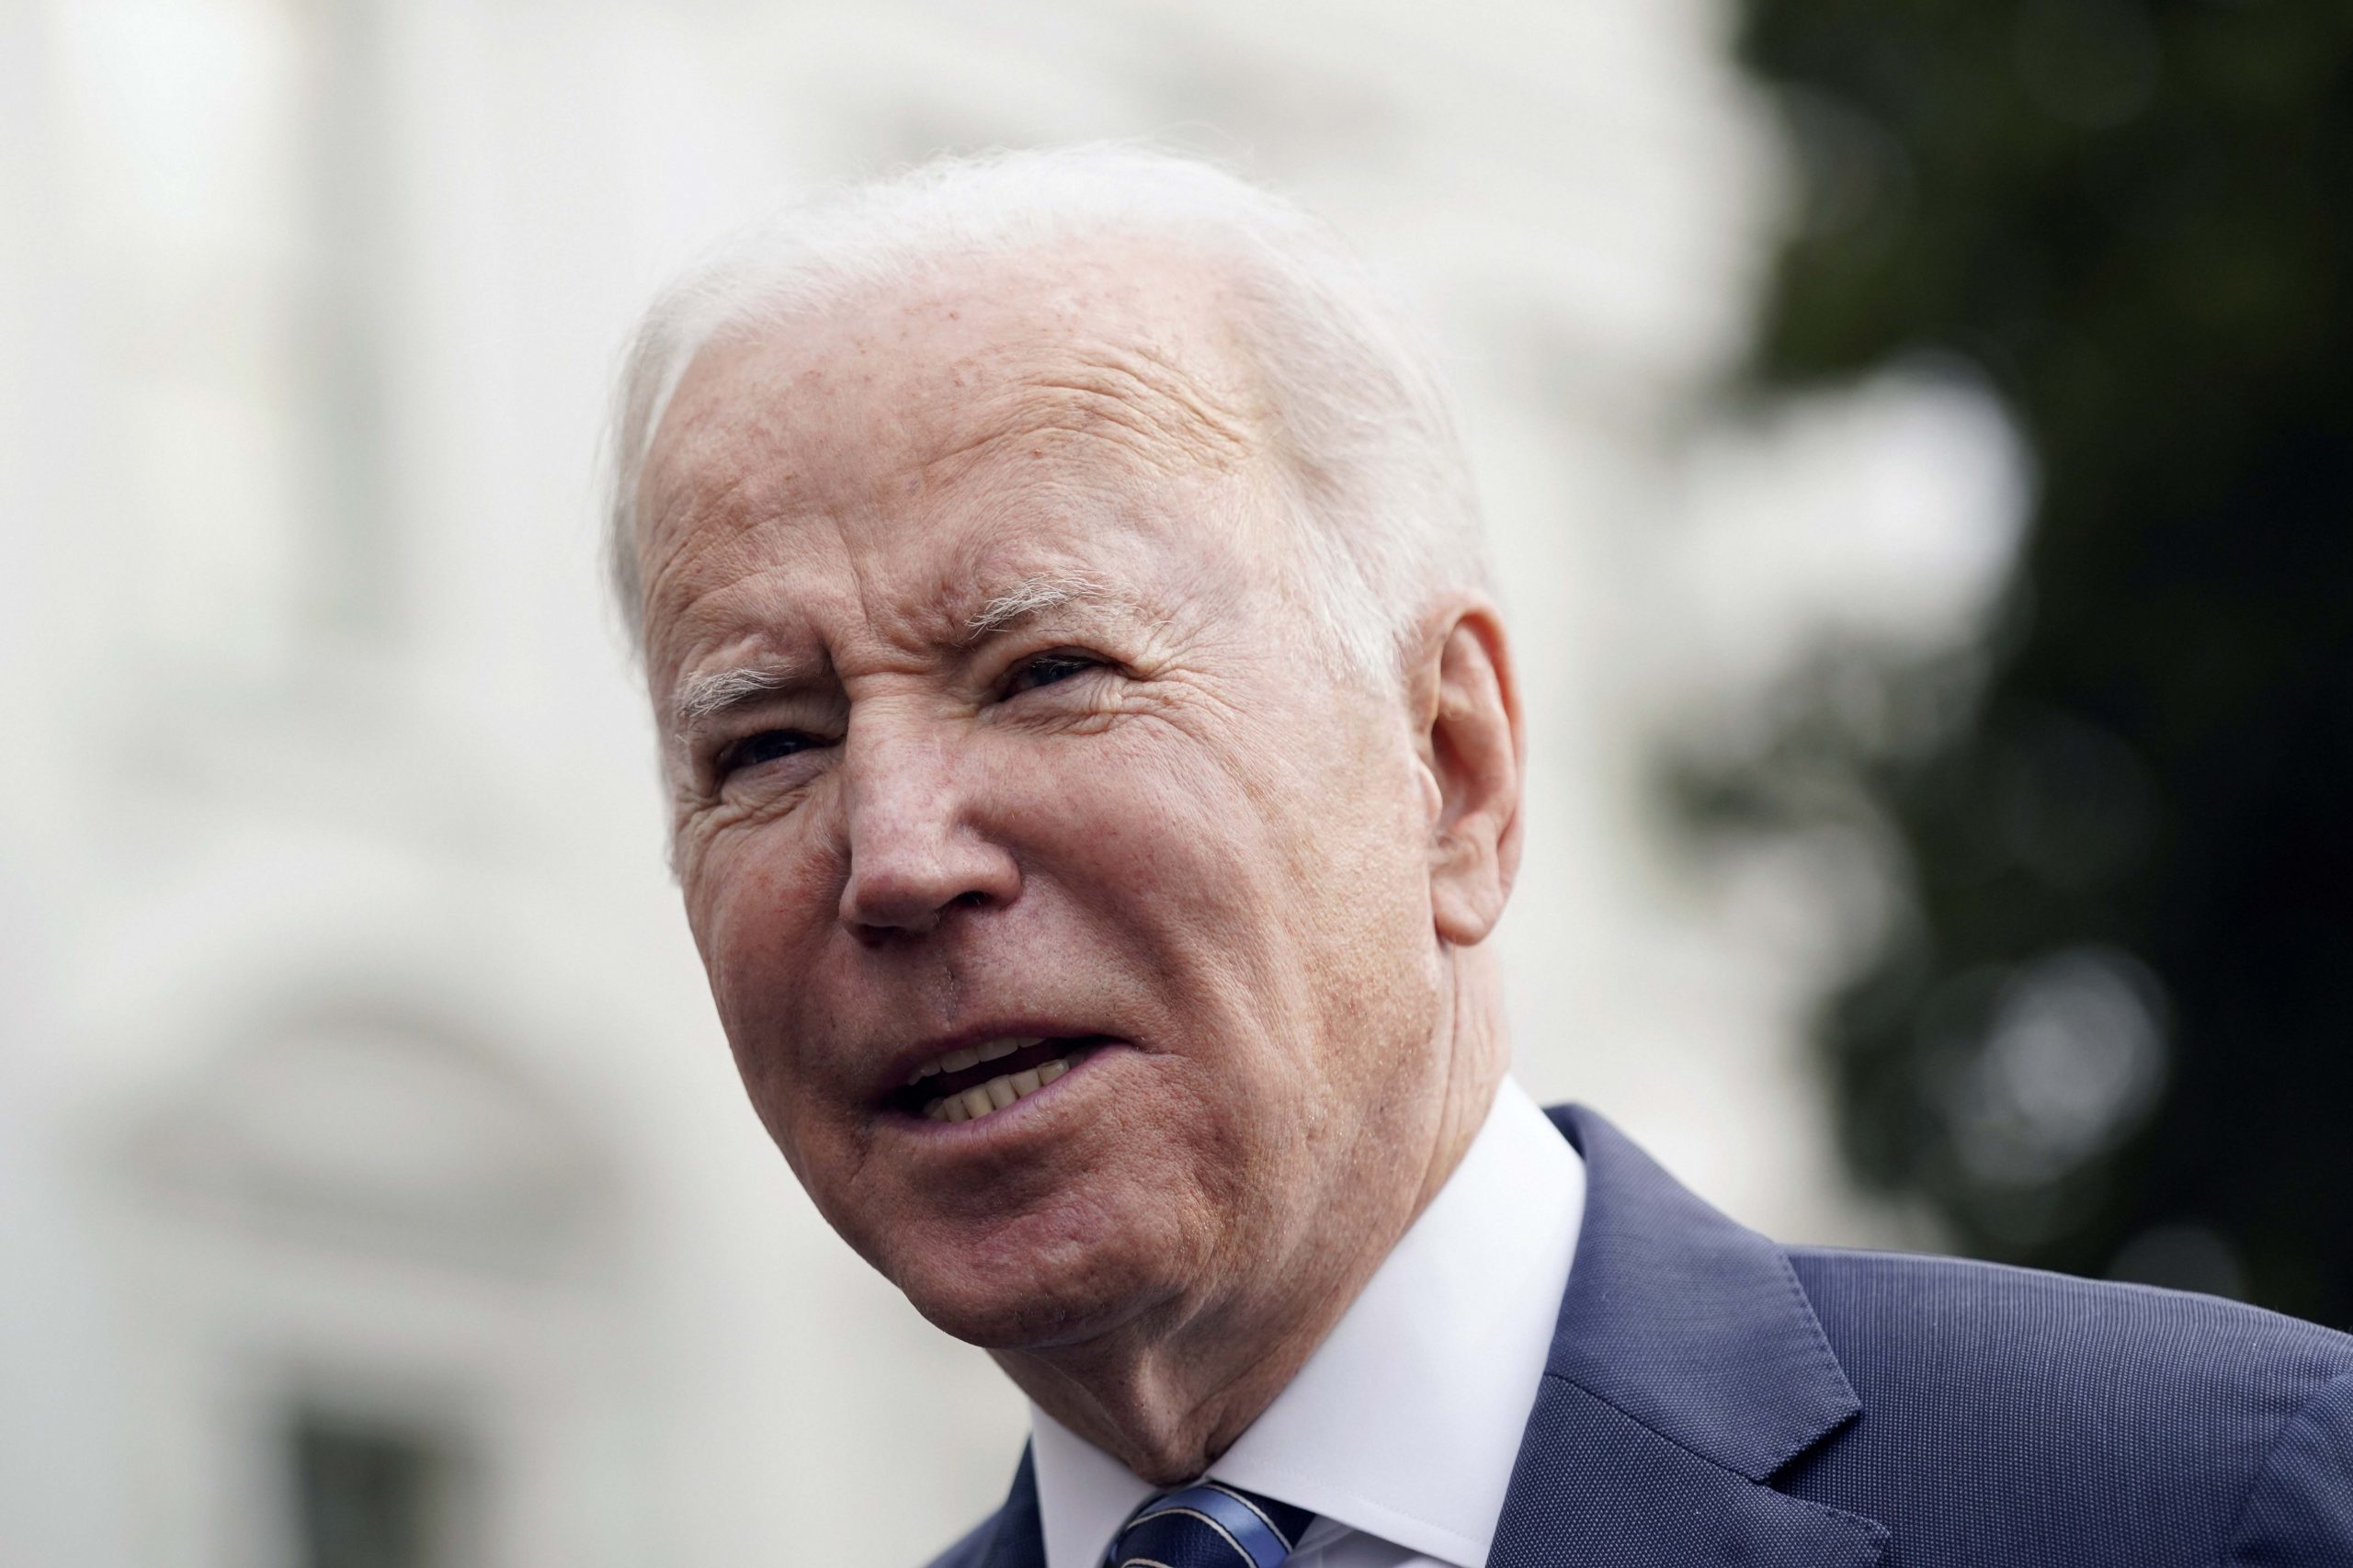 Biden has no plans to talk with Putin amid Ukraine crisis